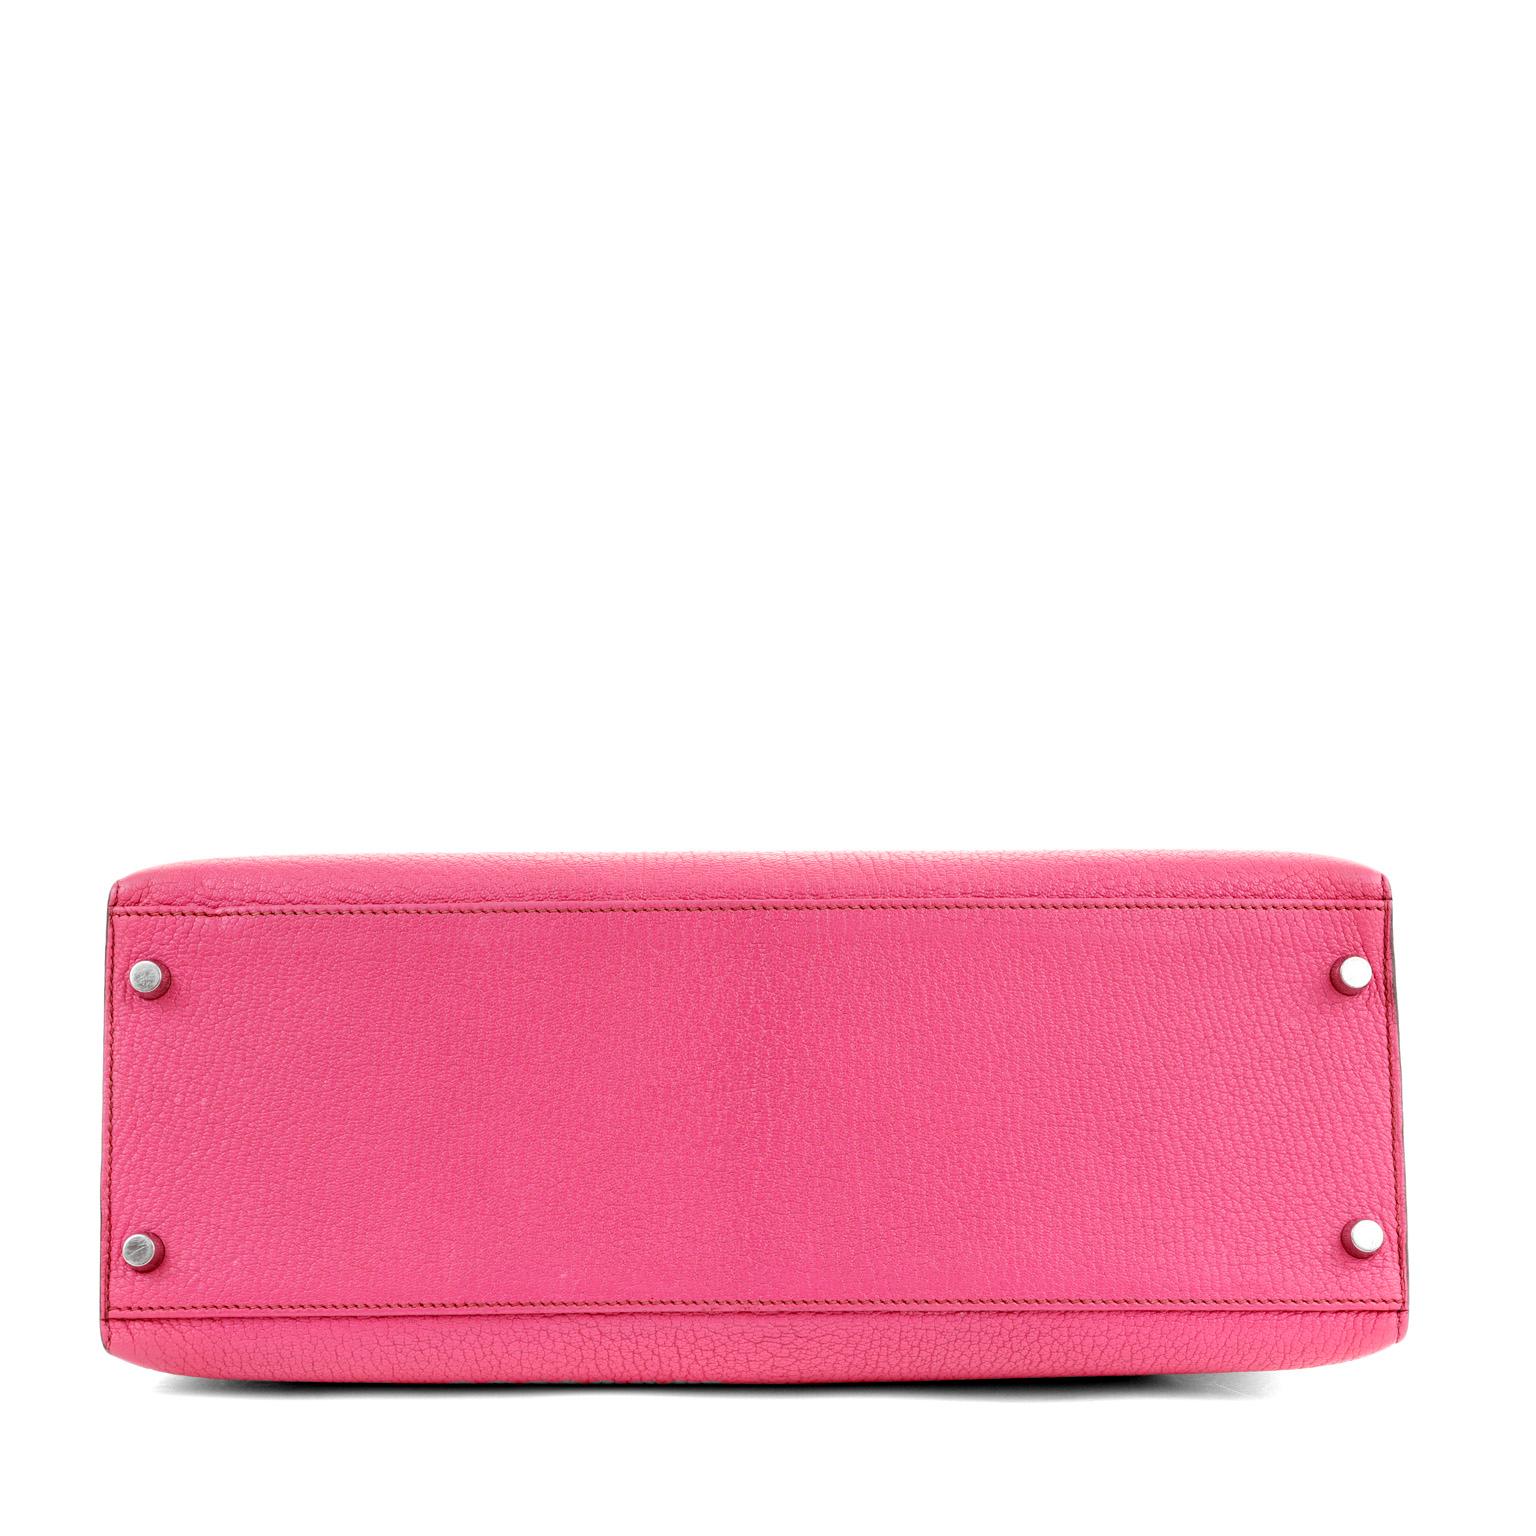 Hermès 35 cm Shocking Pink Chevre Kelly In Good Condition For Sale In Palm Beach, FL